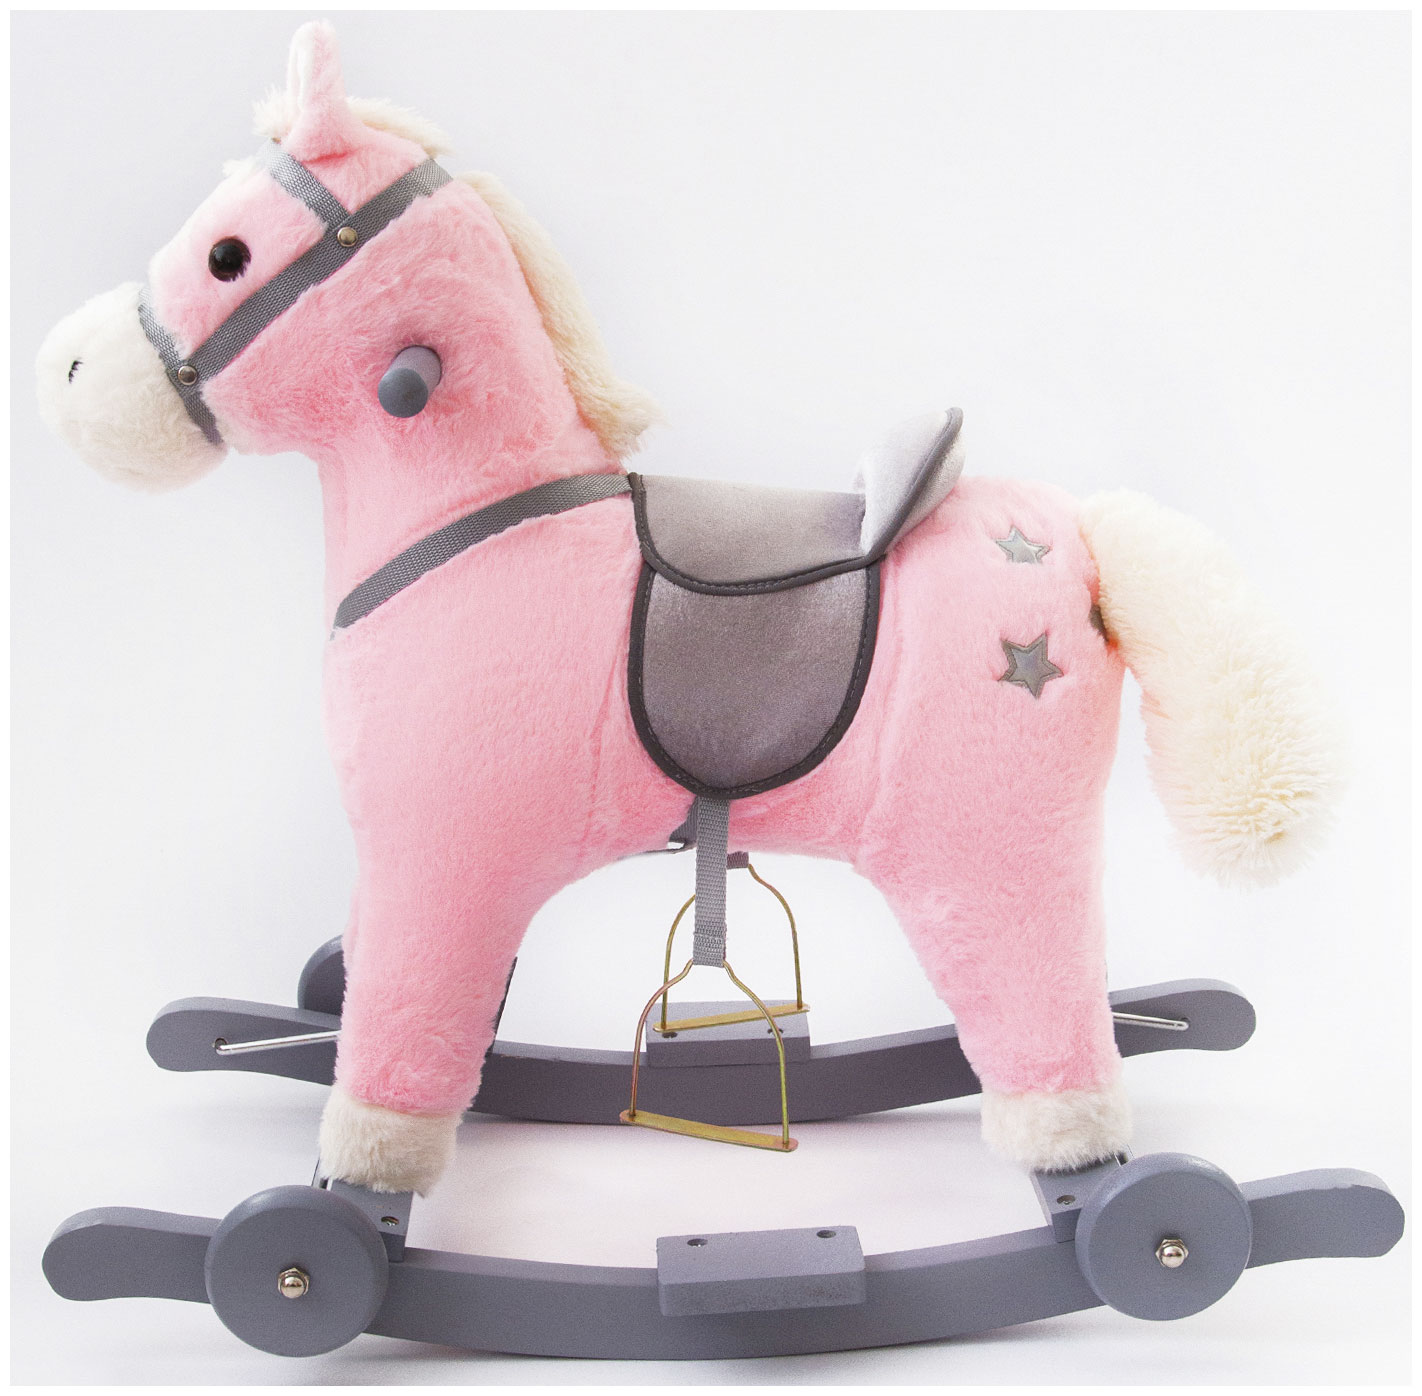 Лошадка каталка-качалка Amarobaby (Prime), с колесами, розовый, 63x35x60 см AMARO-28P-R0 качалка лошадка зефирка цвет серый